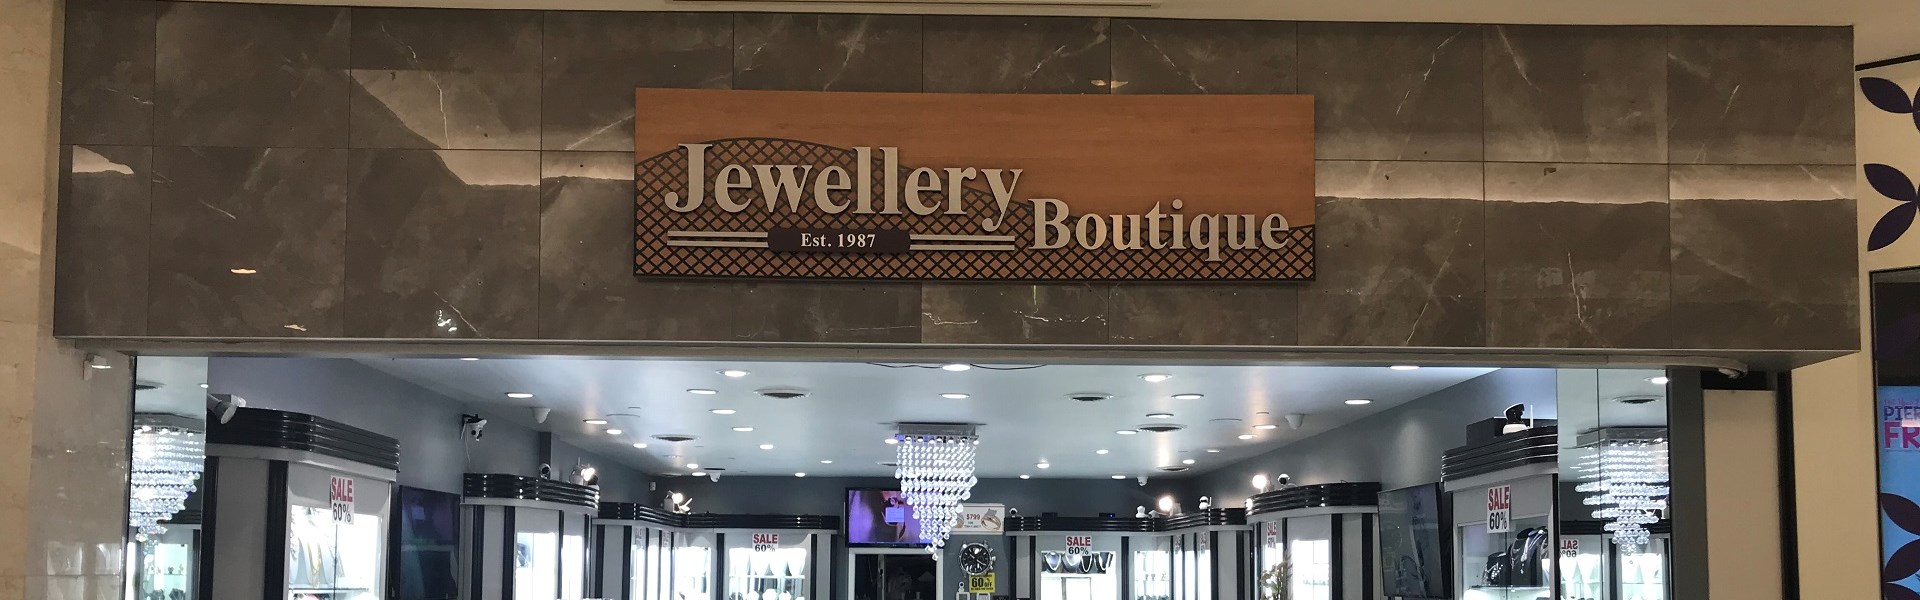 Jewellery Boutique